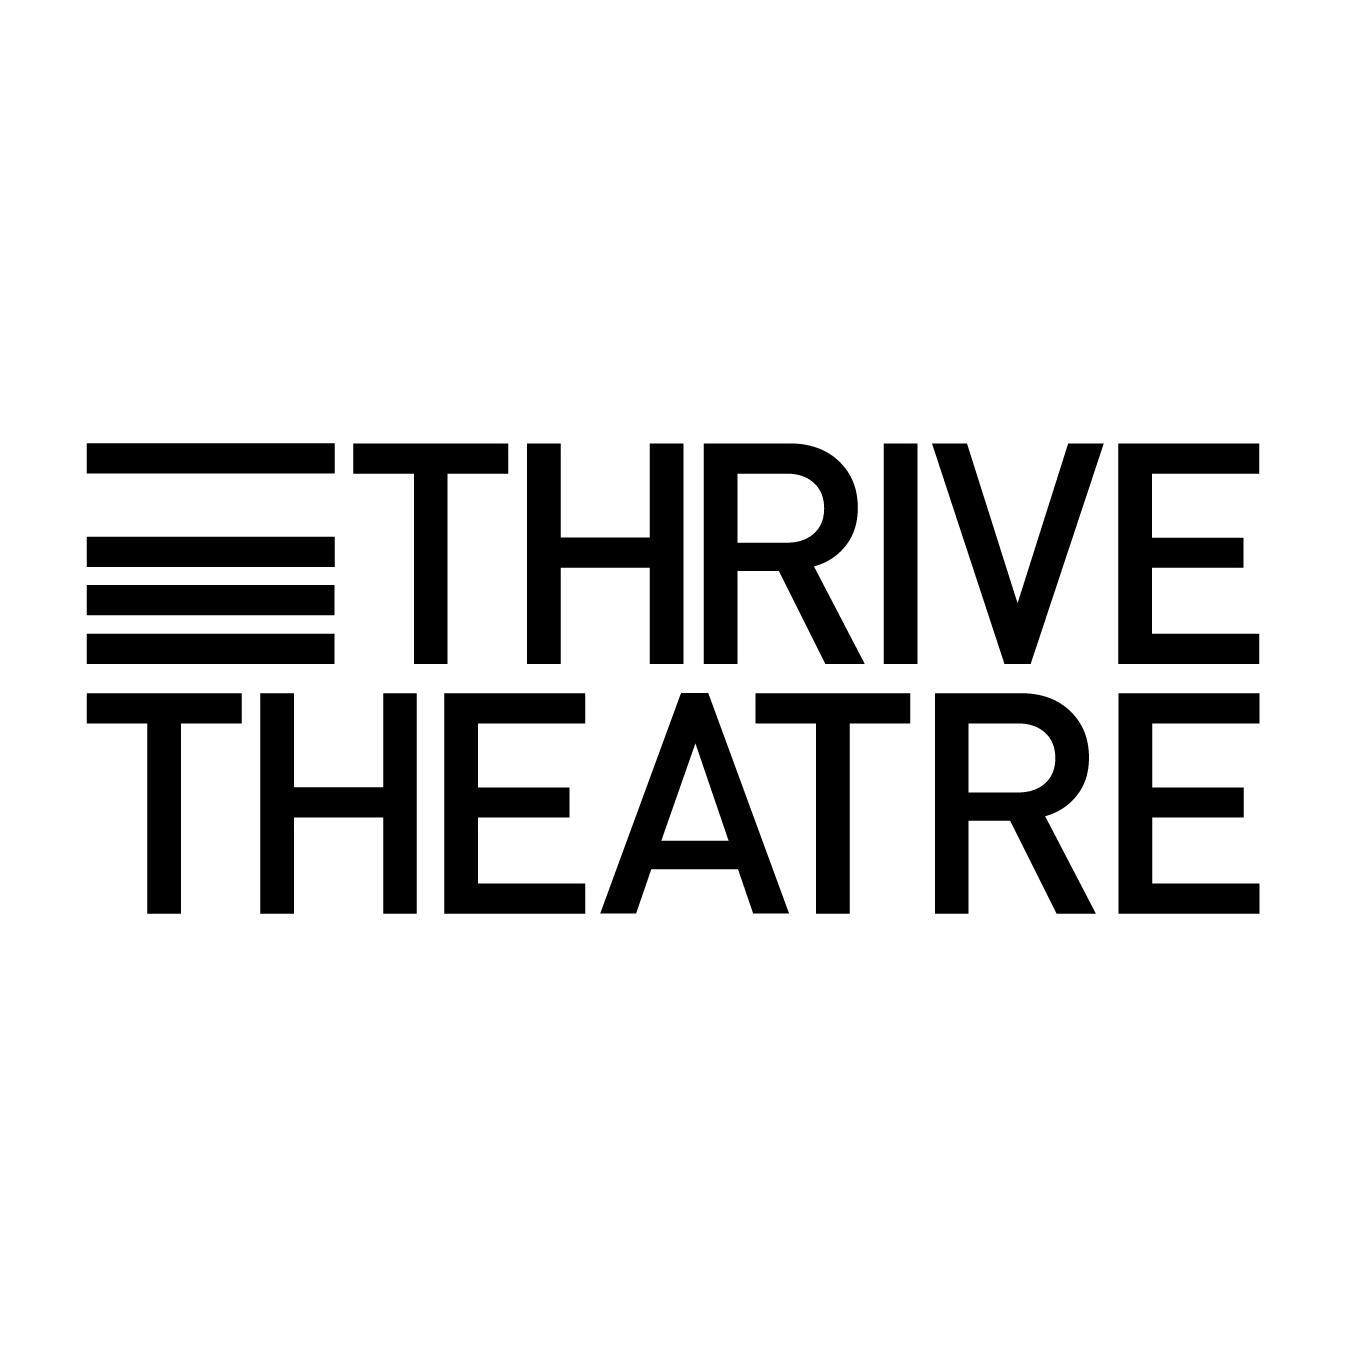 Edinburgh based theatre company staging new work